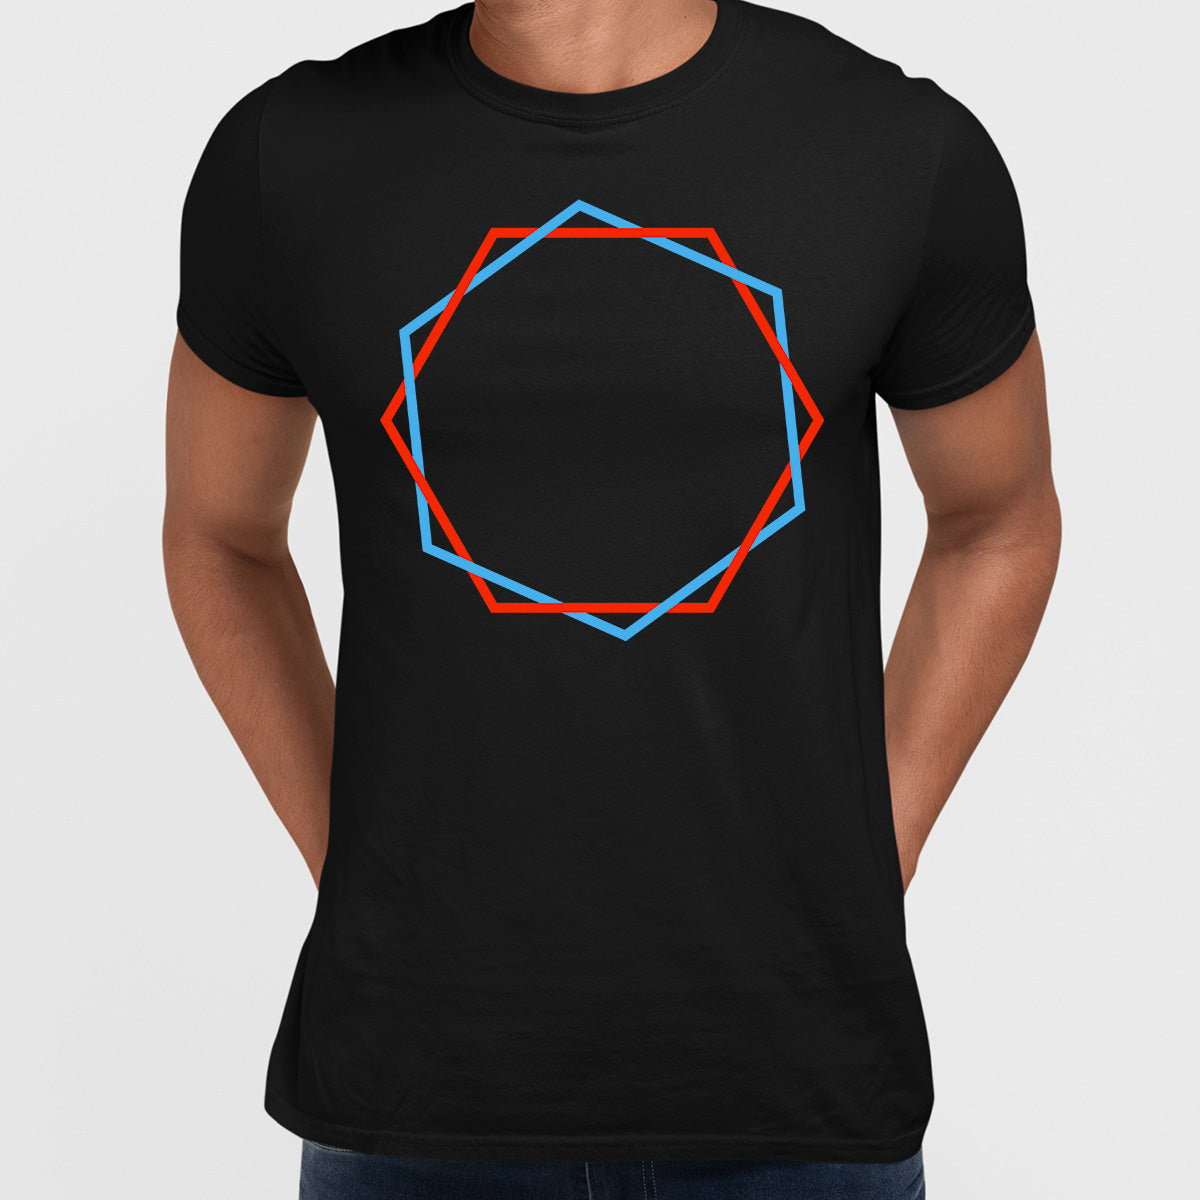 Modern Geometric Elements - Line Dots & Shapes Printed t-shirts Unisex Sample 17 - Kuzi Tees